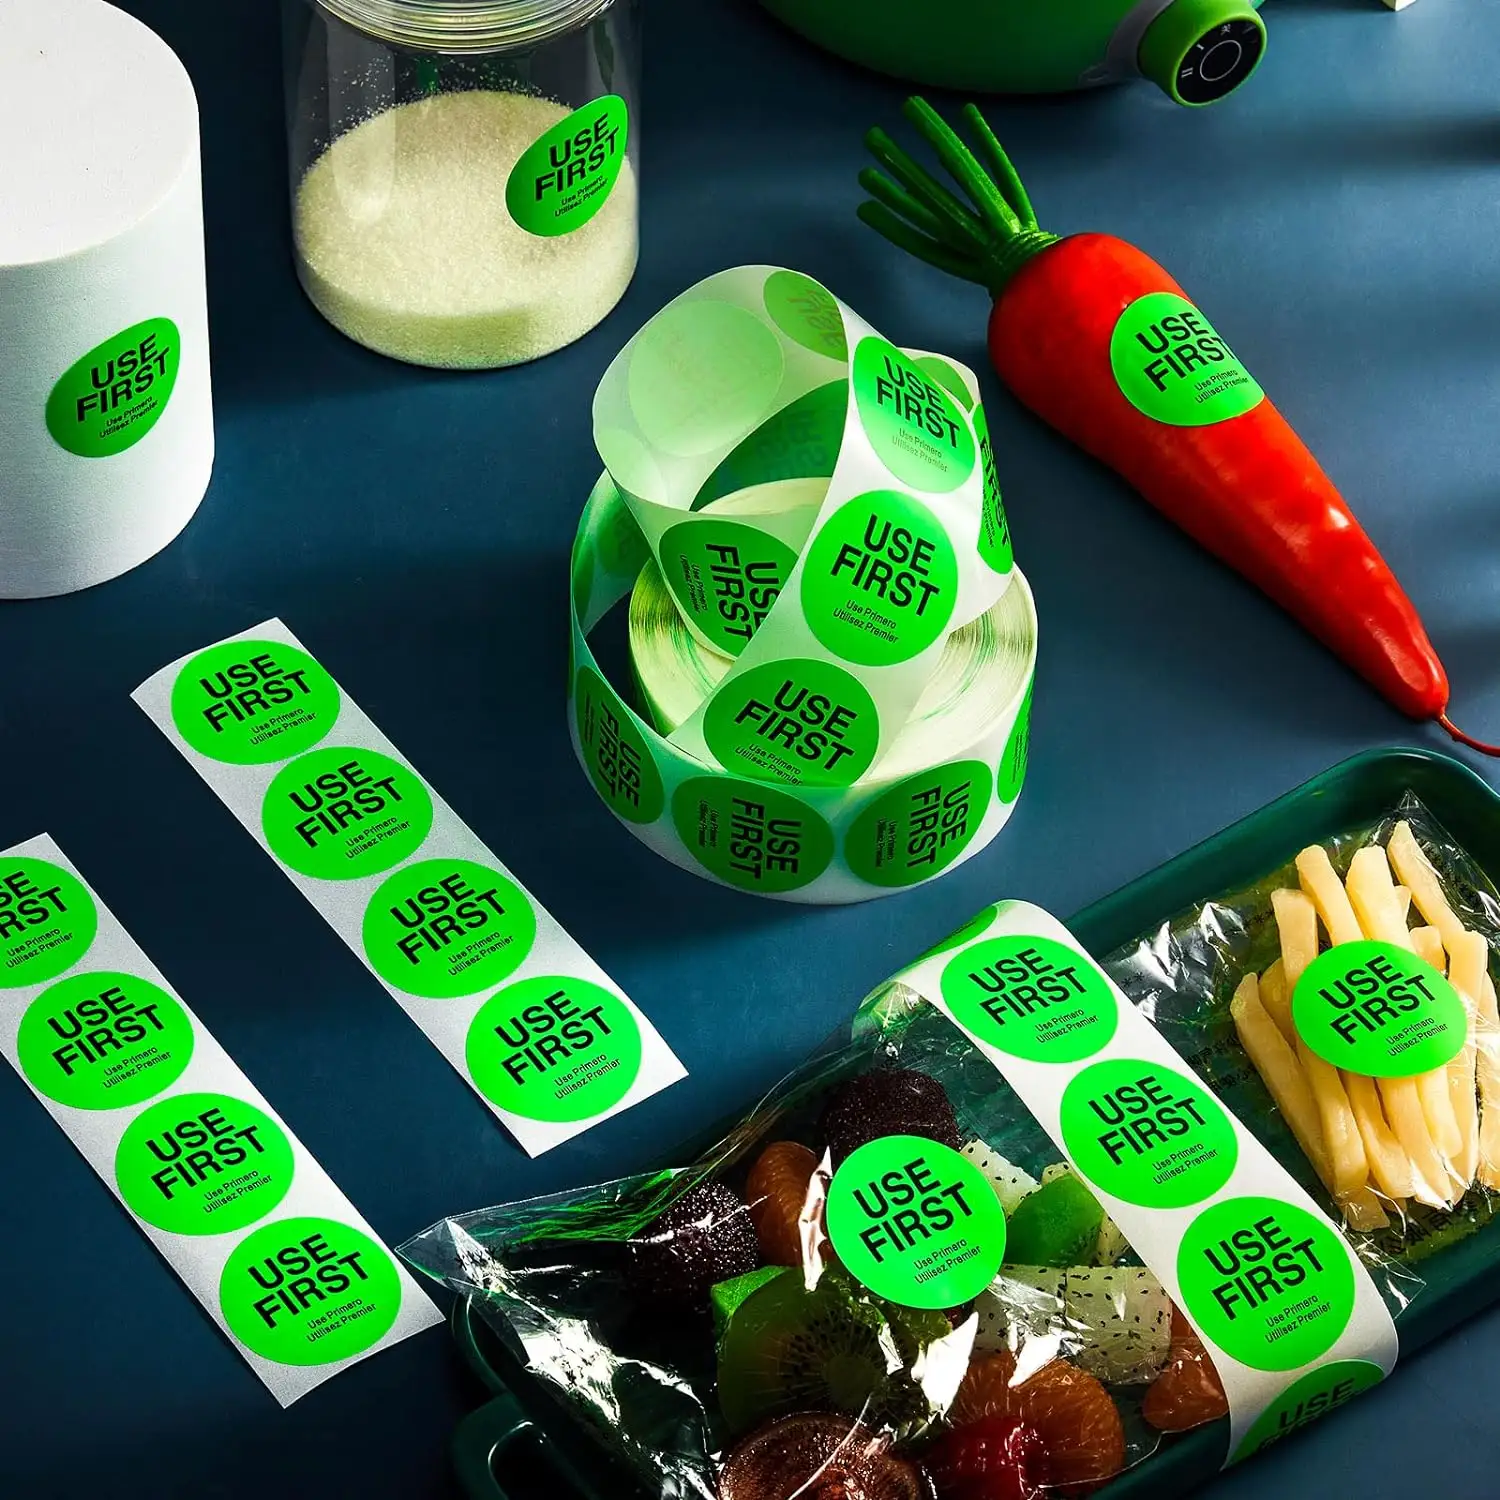 Stiker pertama penggunaan dapat didaur ulang, untuk makanan 1.5 inci UNTUK RESTORAN Label makanan perekat dapat dilepas Label lingkaran hijau